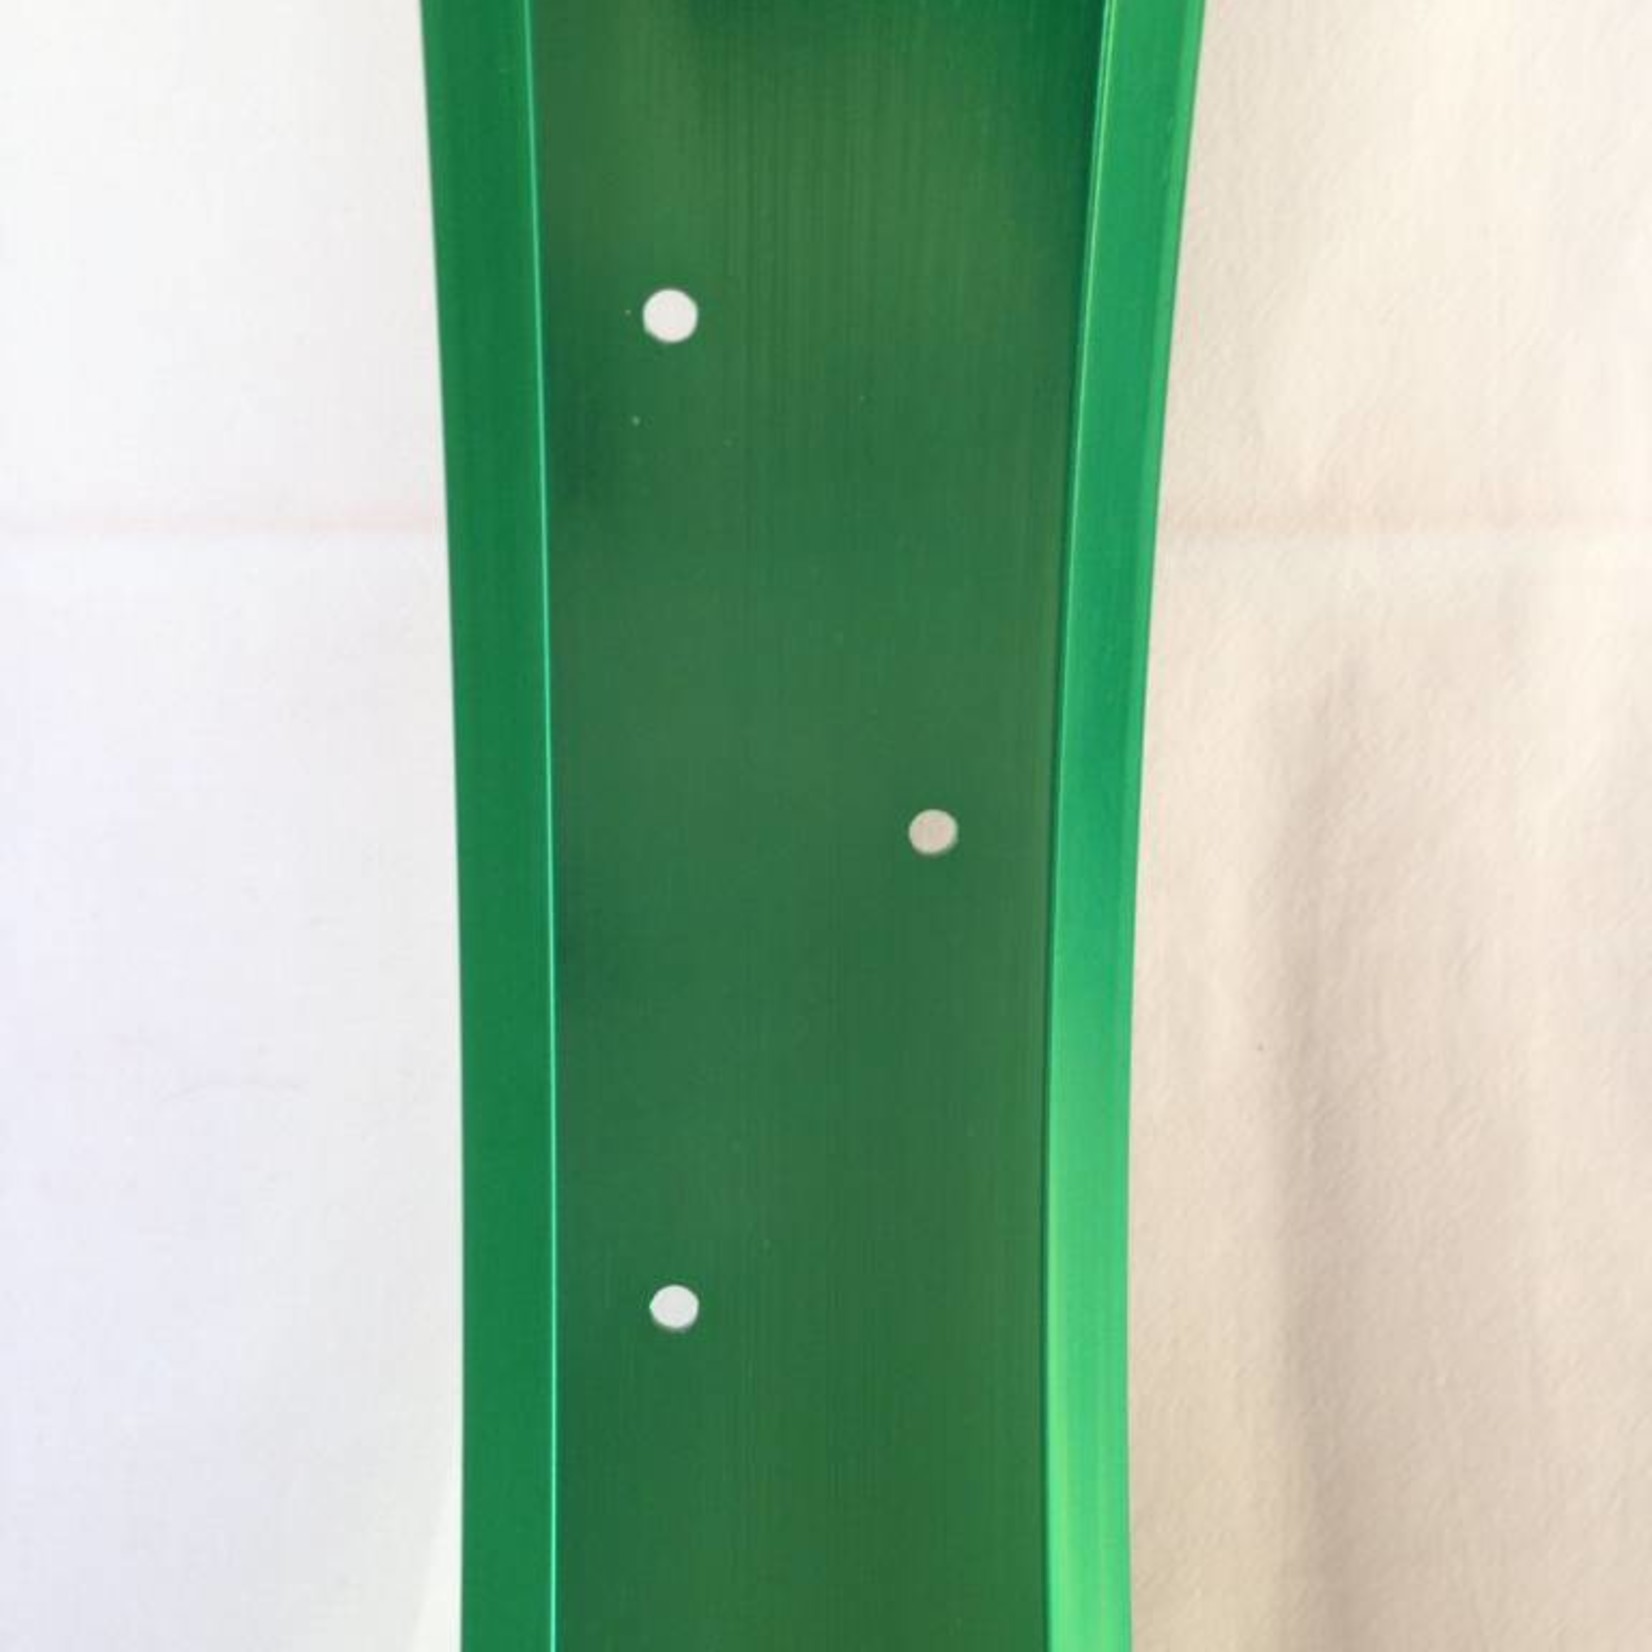 alloy rim RM65, 24", green anodized